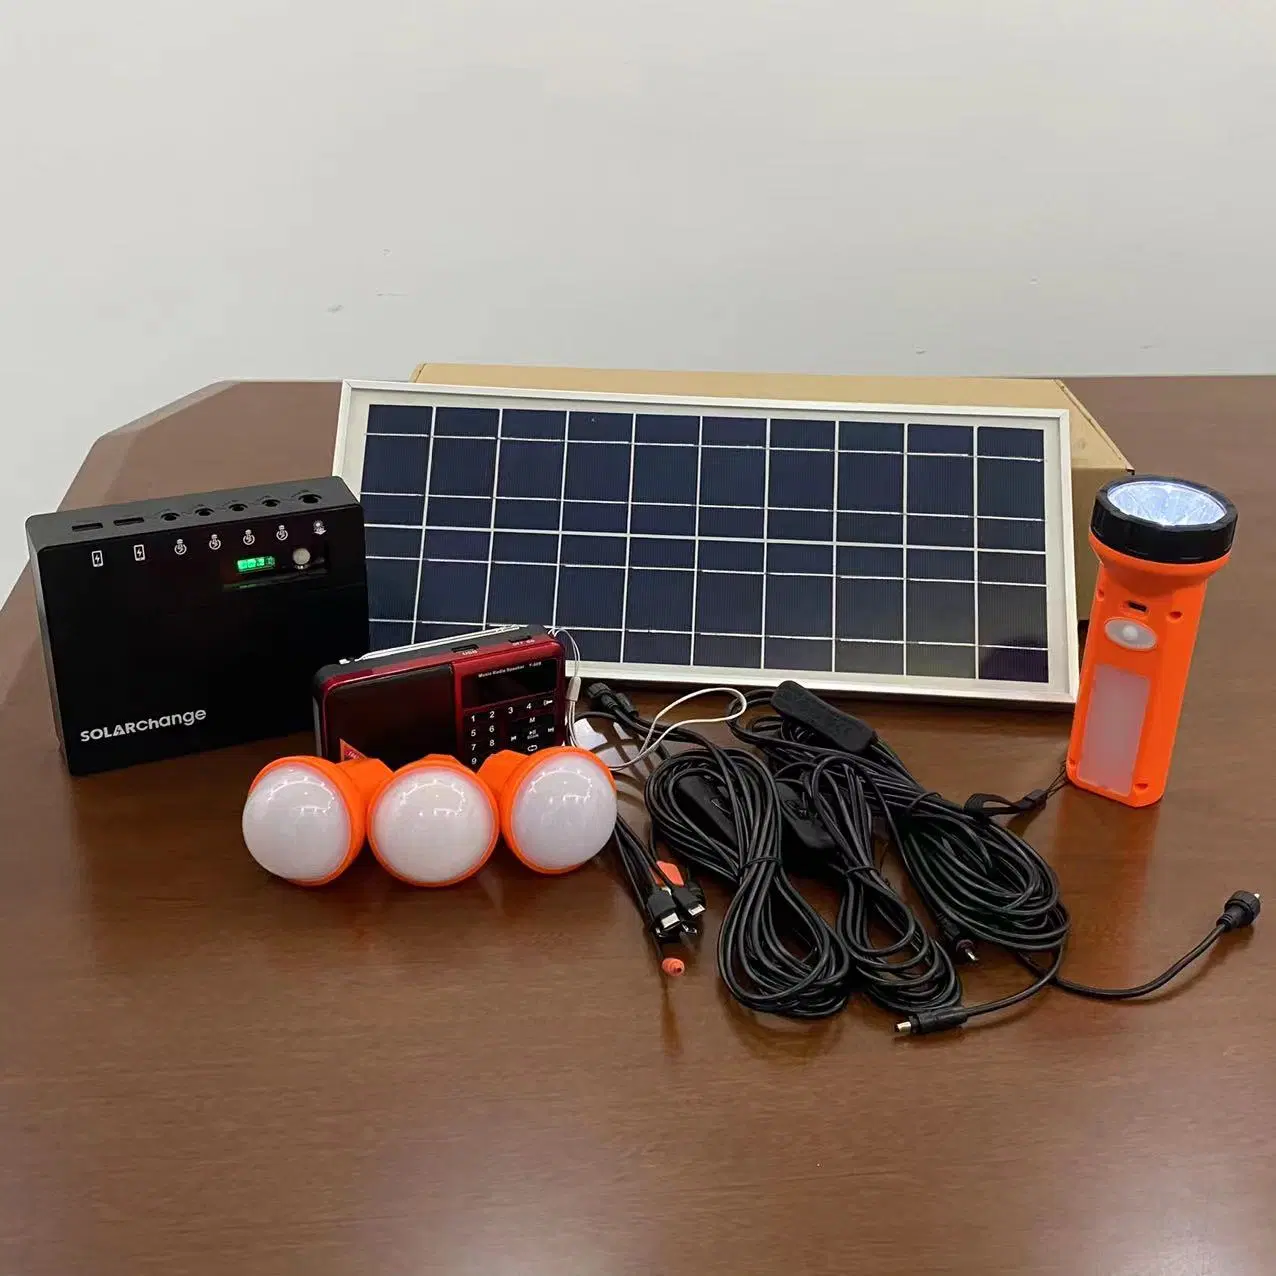 Verasol Zertifikat 10W/20W Beleuchtung Solar Home System Kit mit FM Radio/Lampen/Mobile Ladegeräte (SC-810)